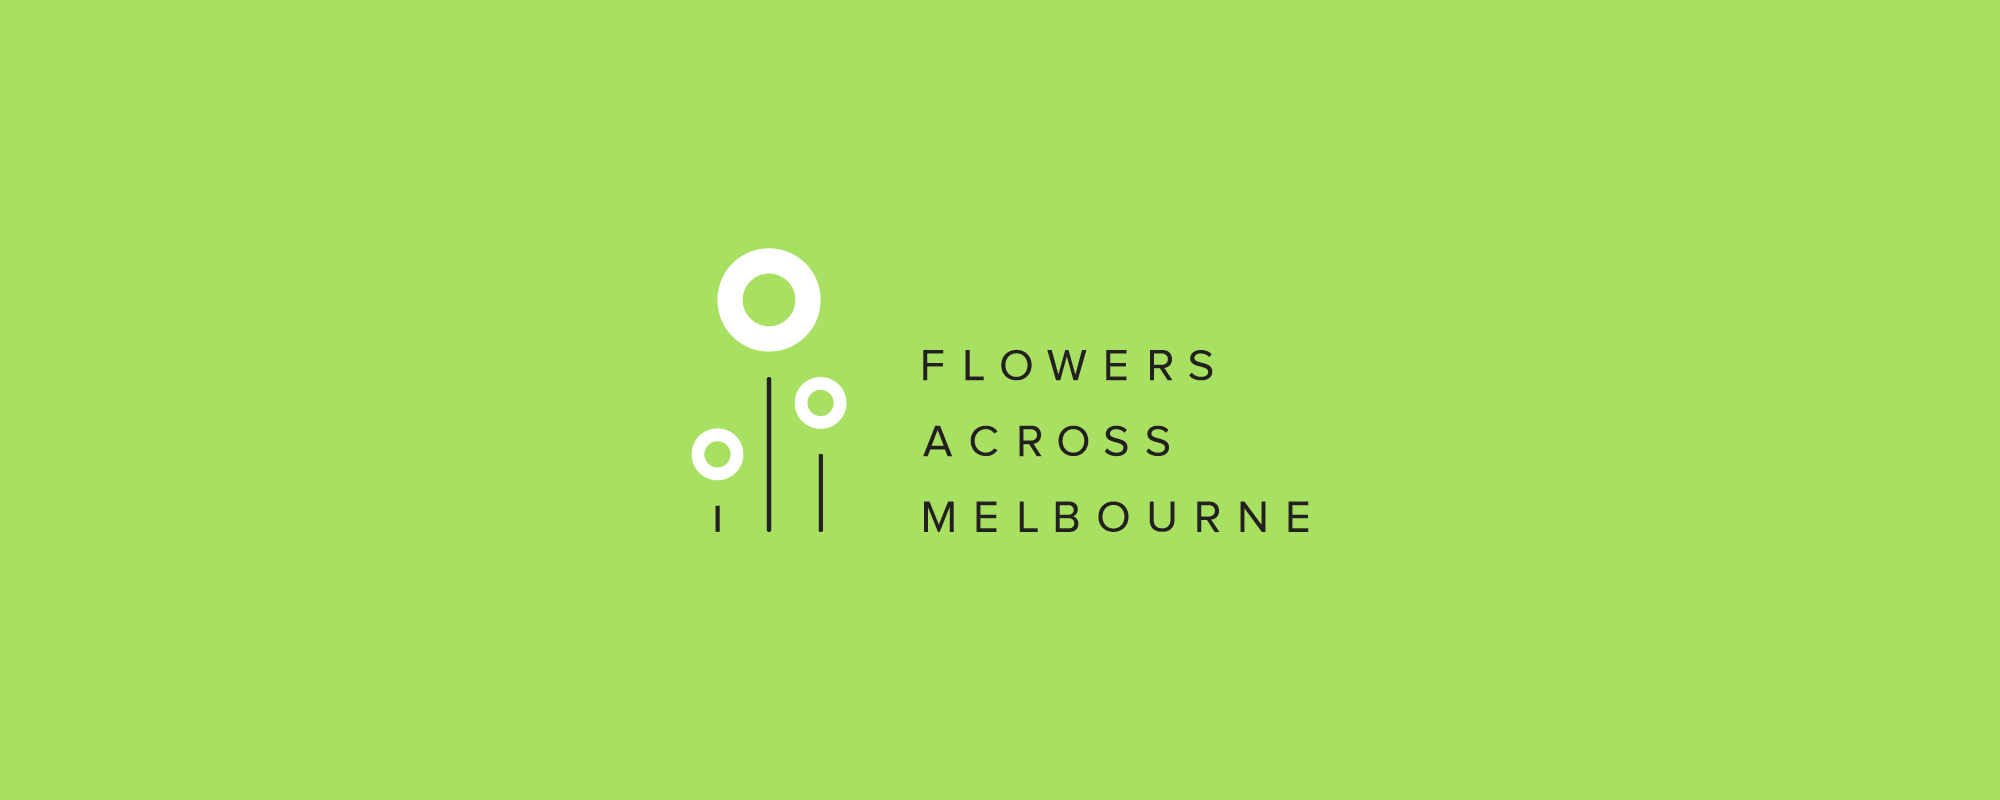 Flowers Across Melbourne Cover Image.jpg